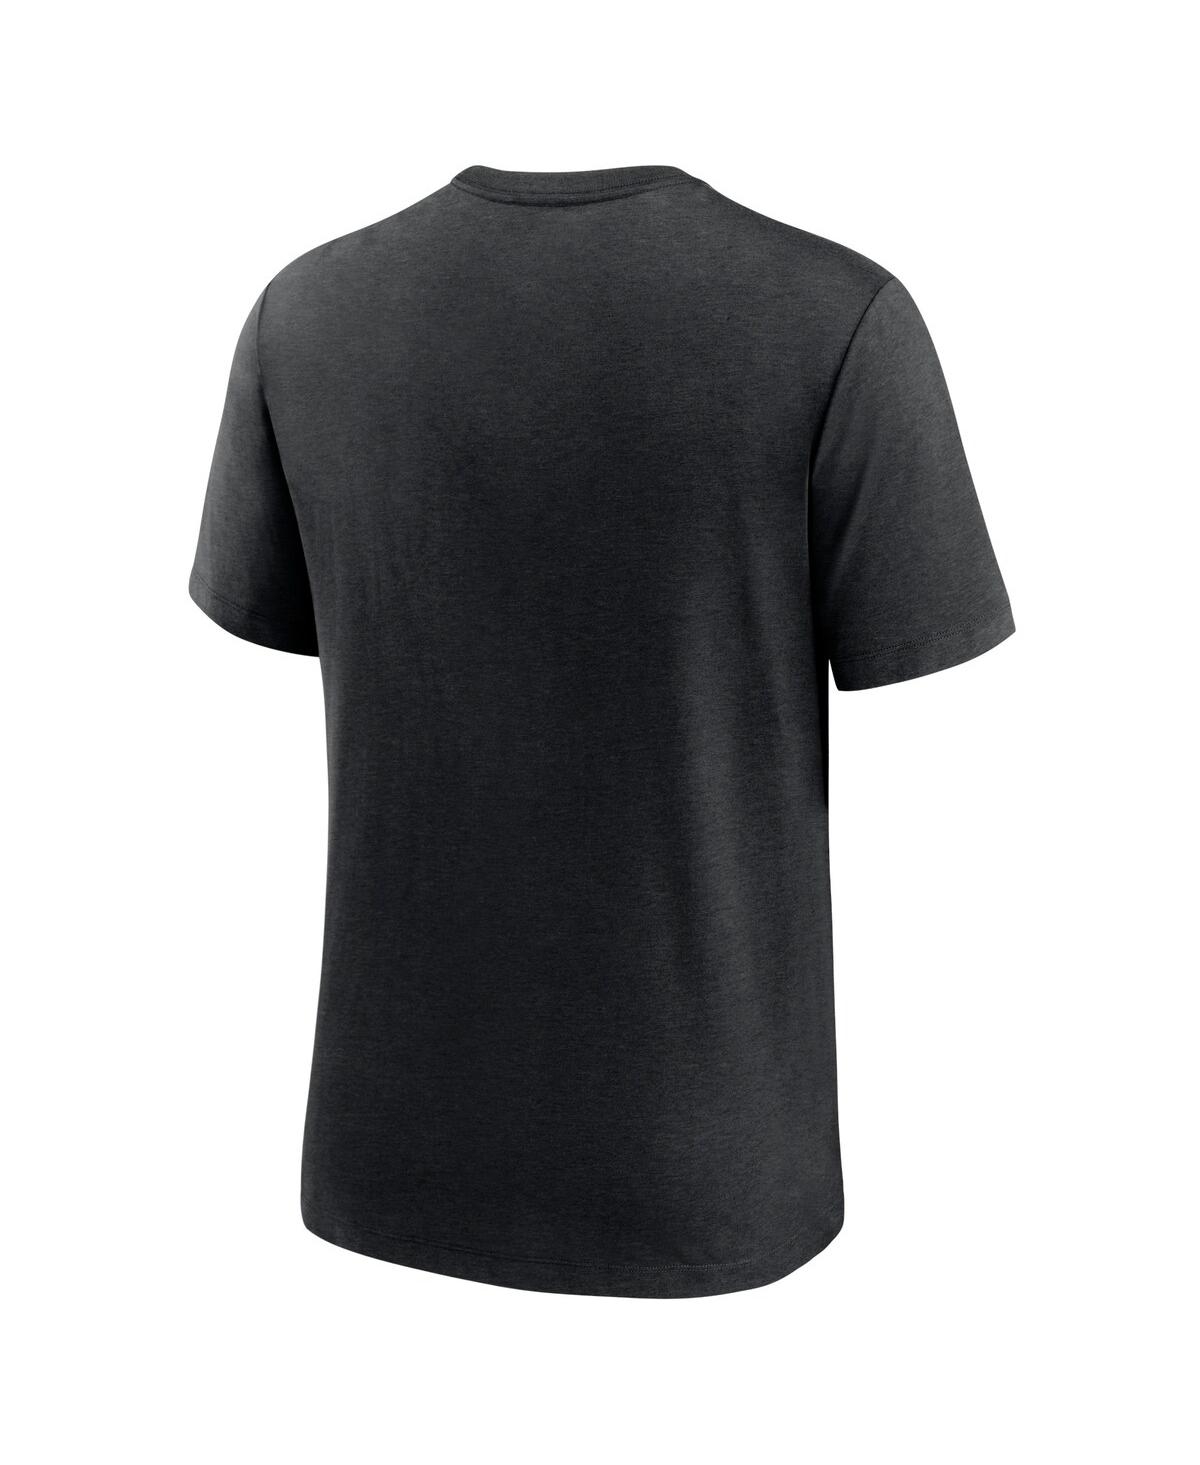 Shop Nike Men's  Heather Black Las Vegas Raiders Team Tri-blend T-shirt